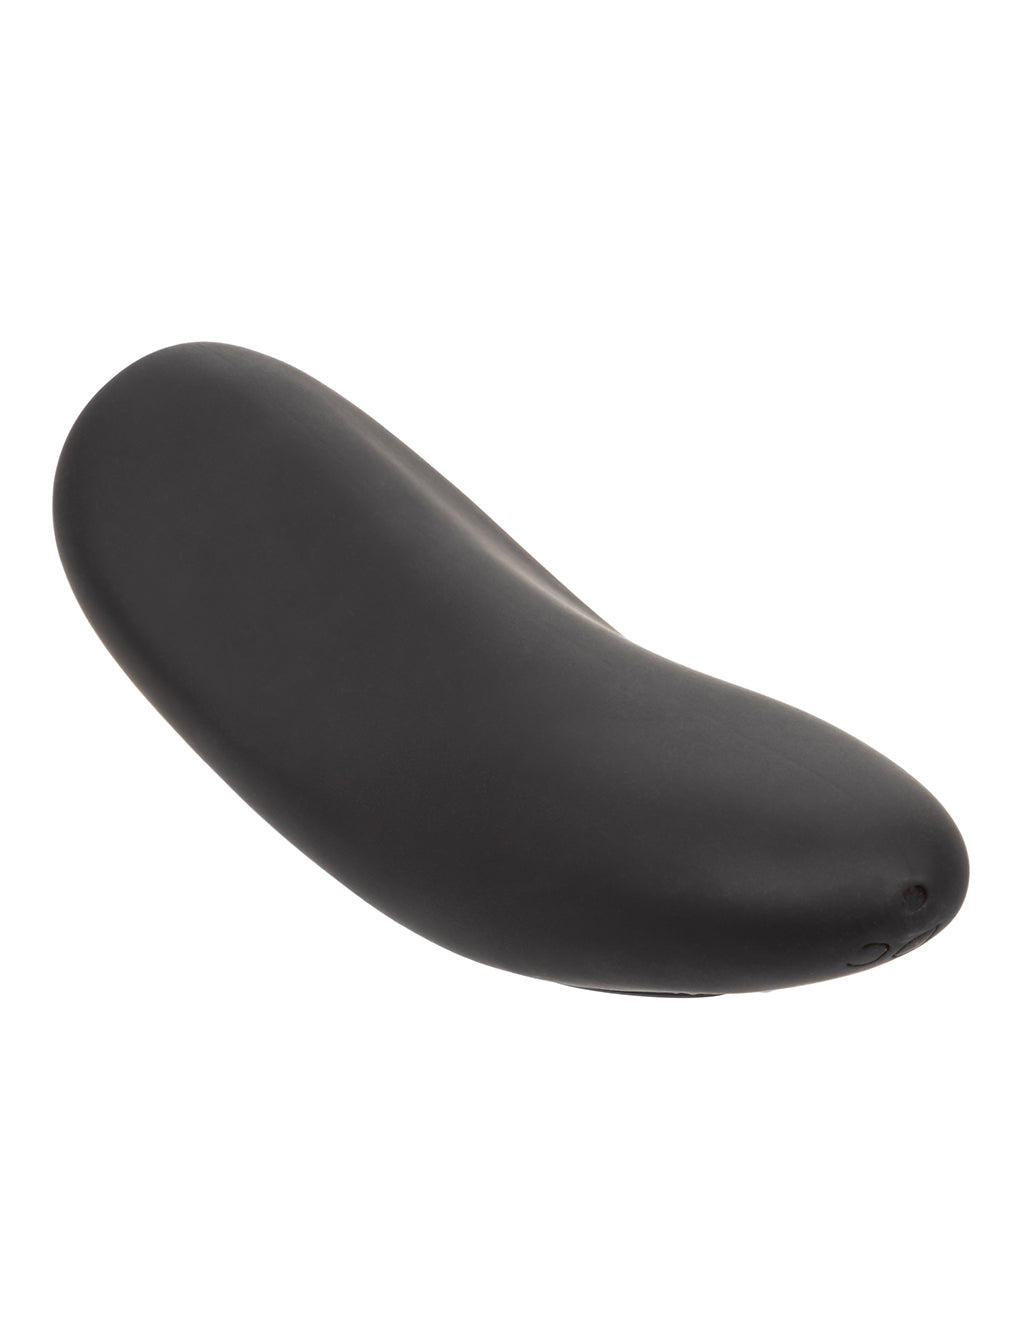 HUSTLER® Playthings Remote Control Panty- Vibrator Top Angle Side